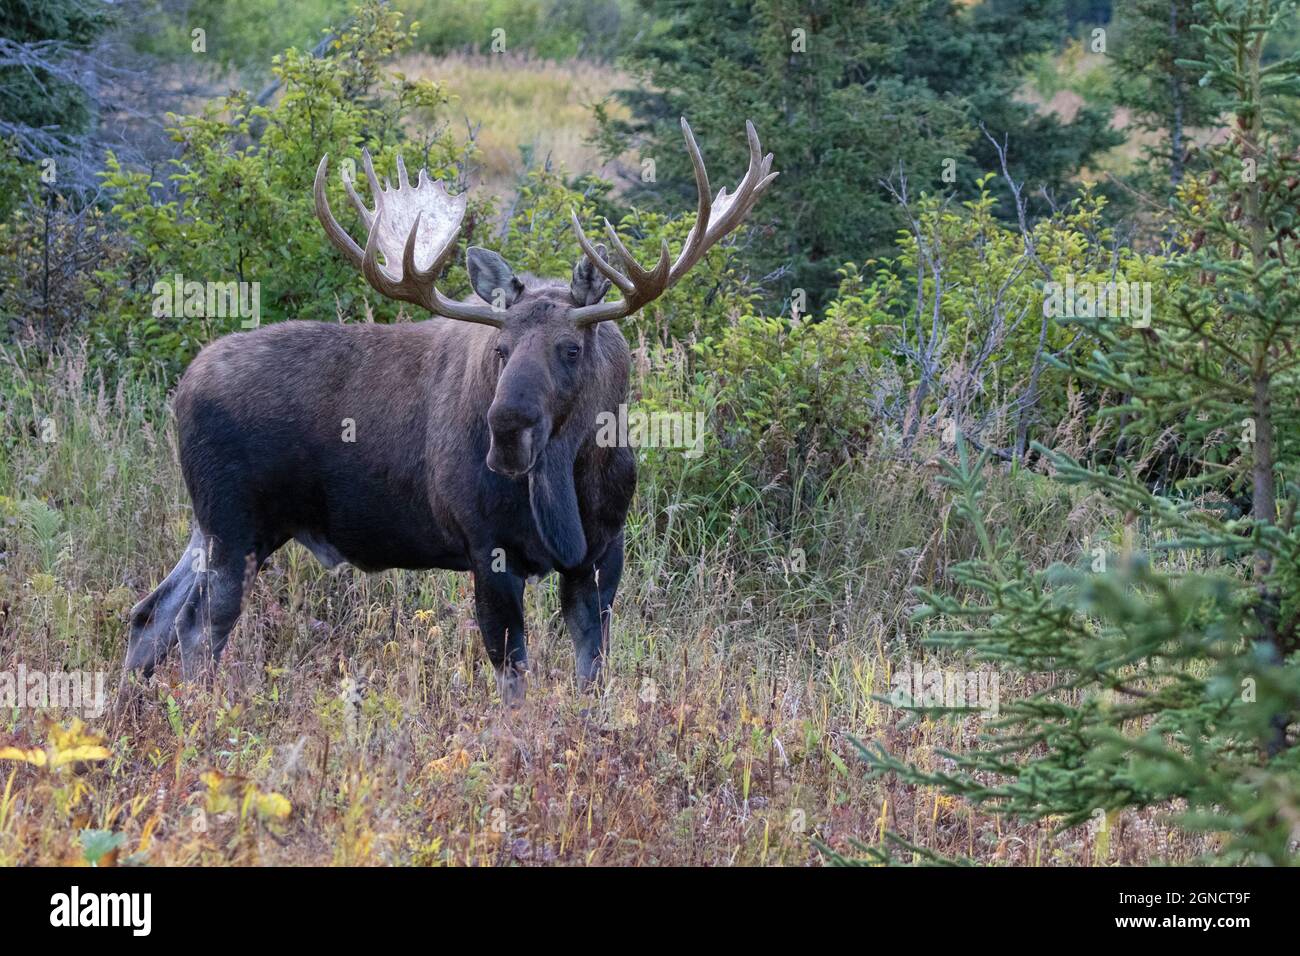 A large Alaska bull moose seeks challengers during the fall rut, or breeding season. Stock Photo